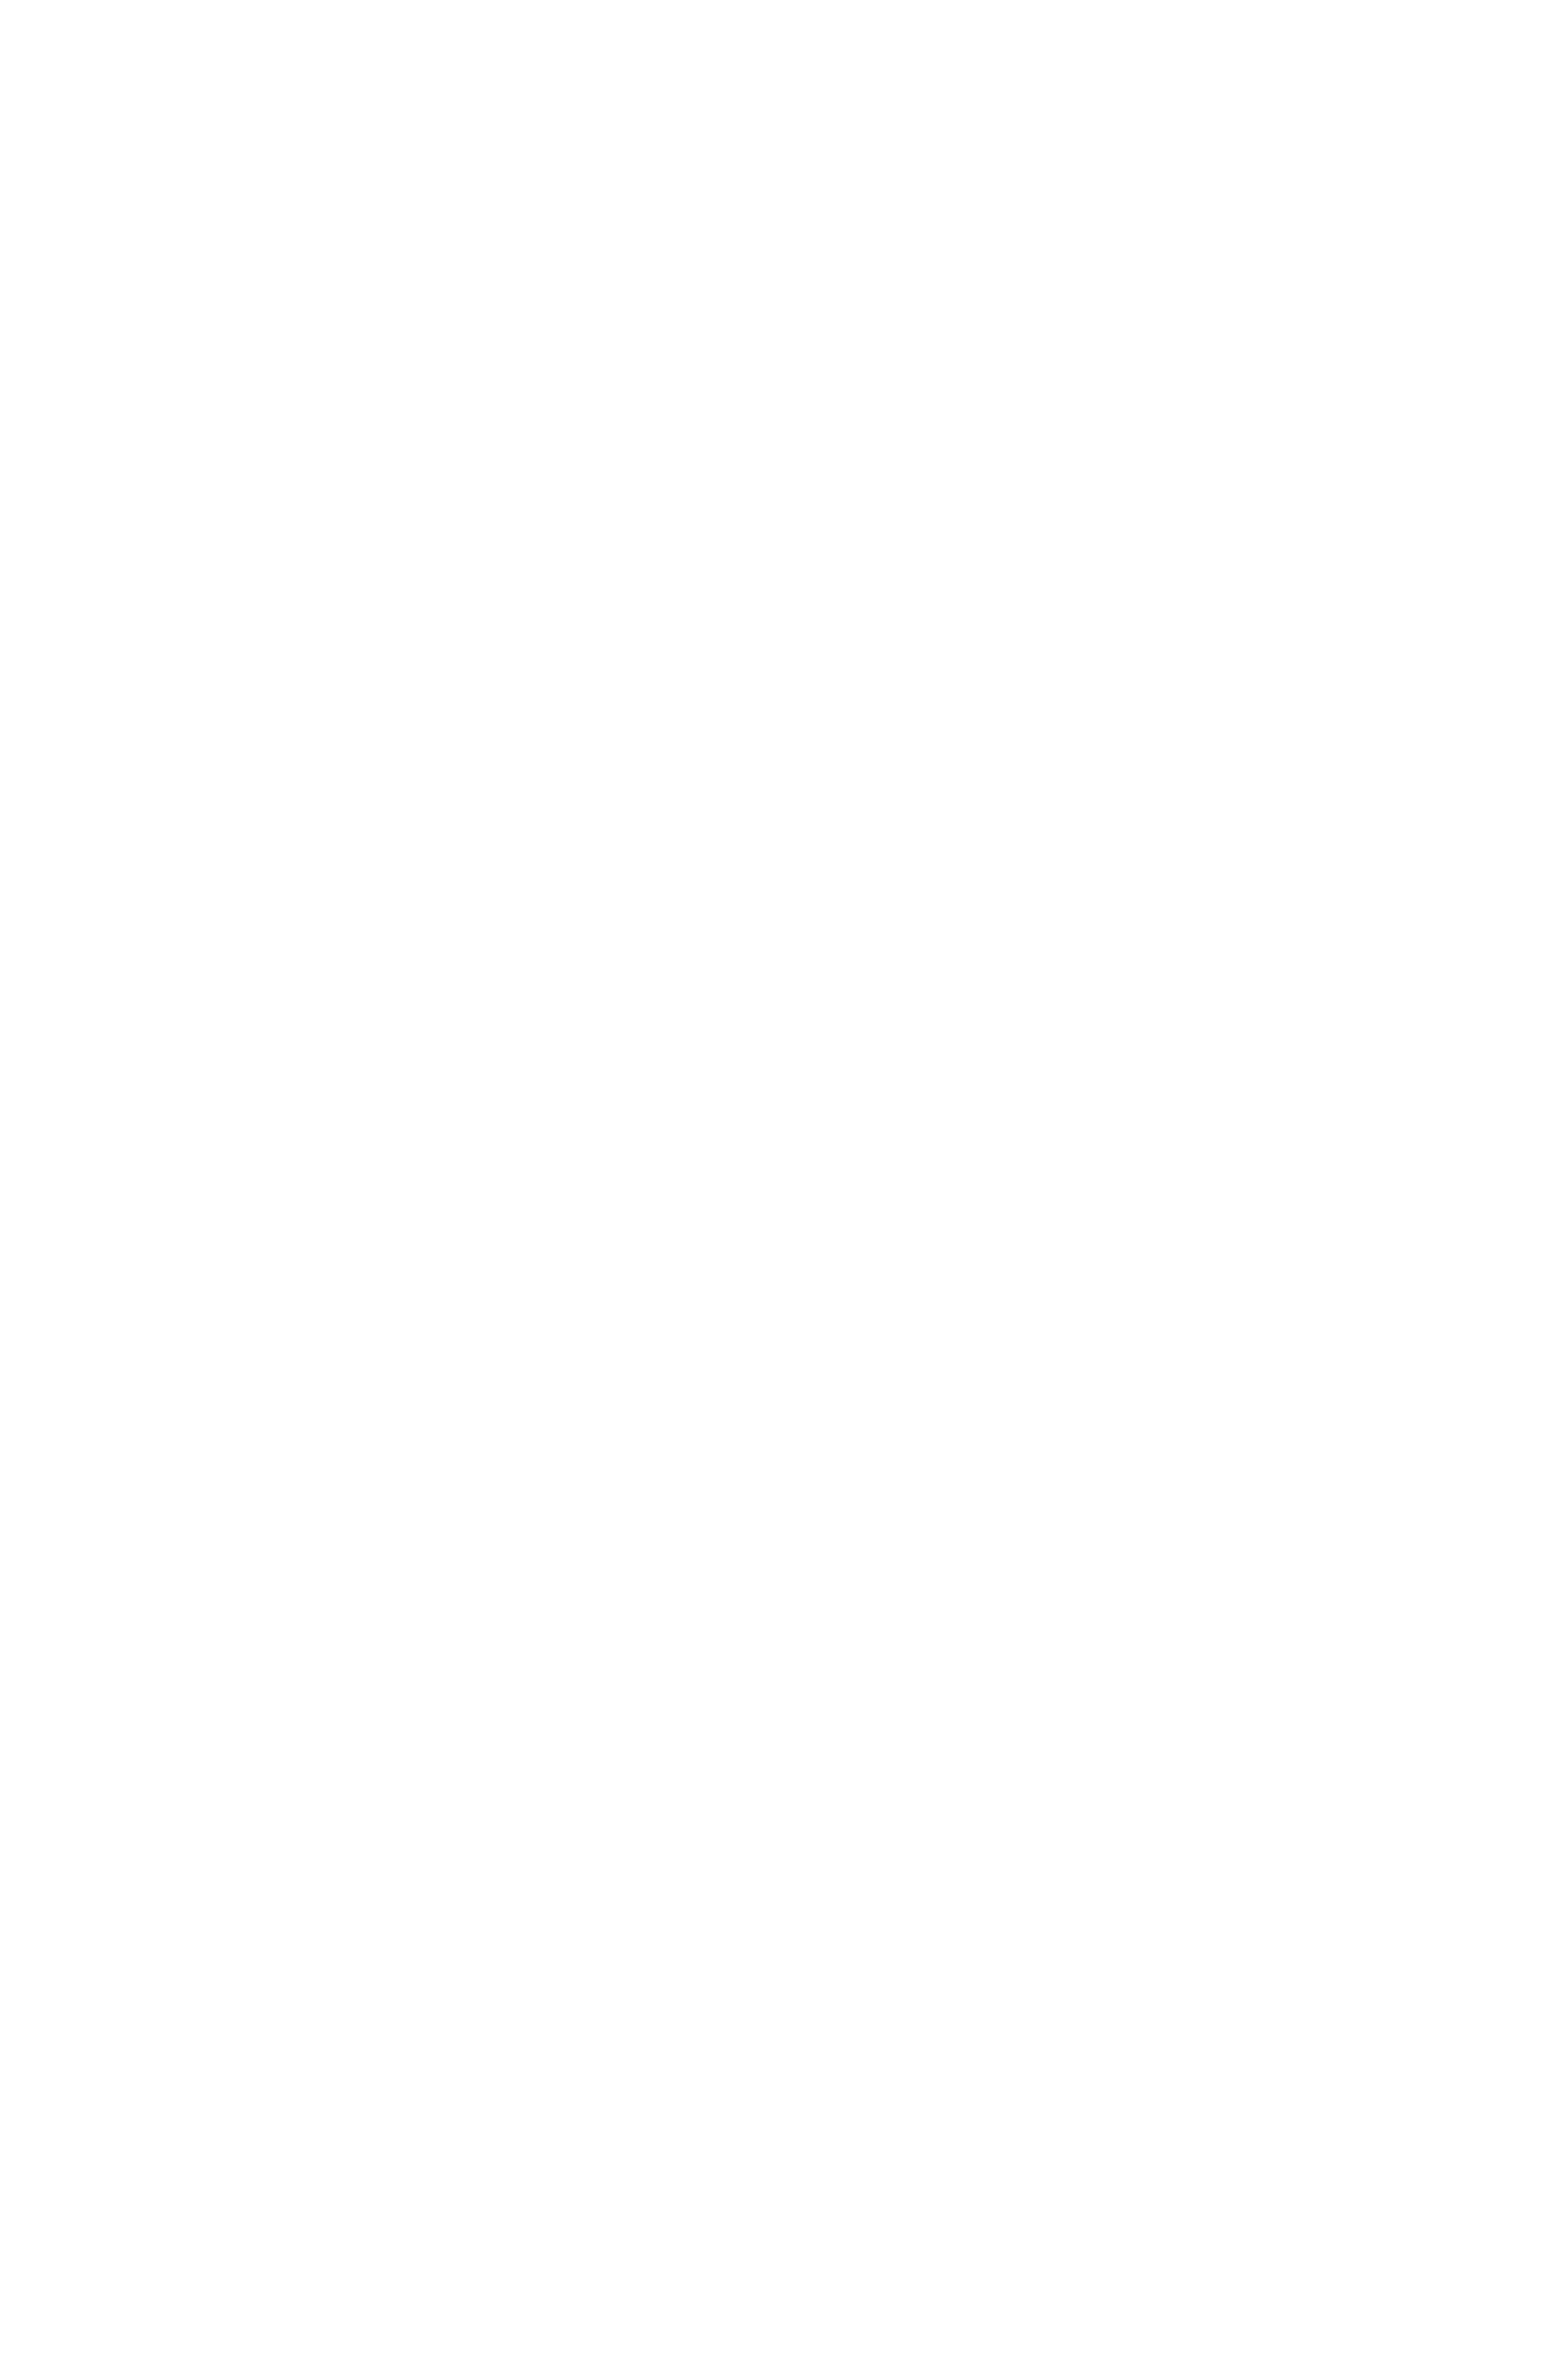 Ornitogalum Arabicum